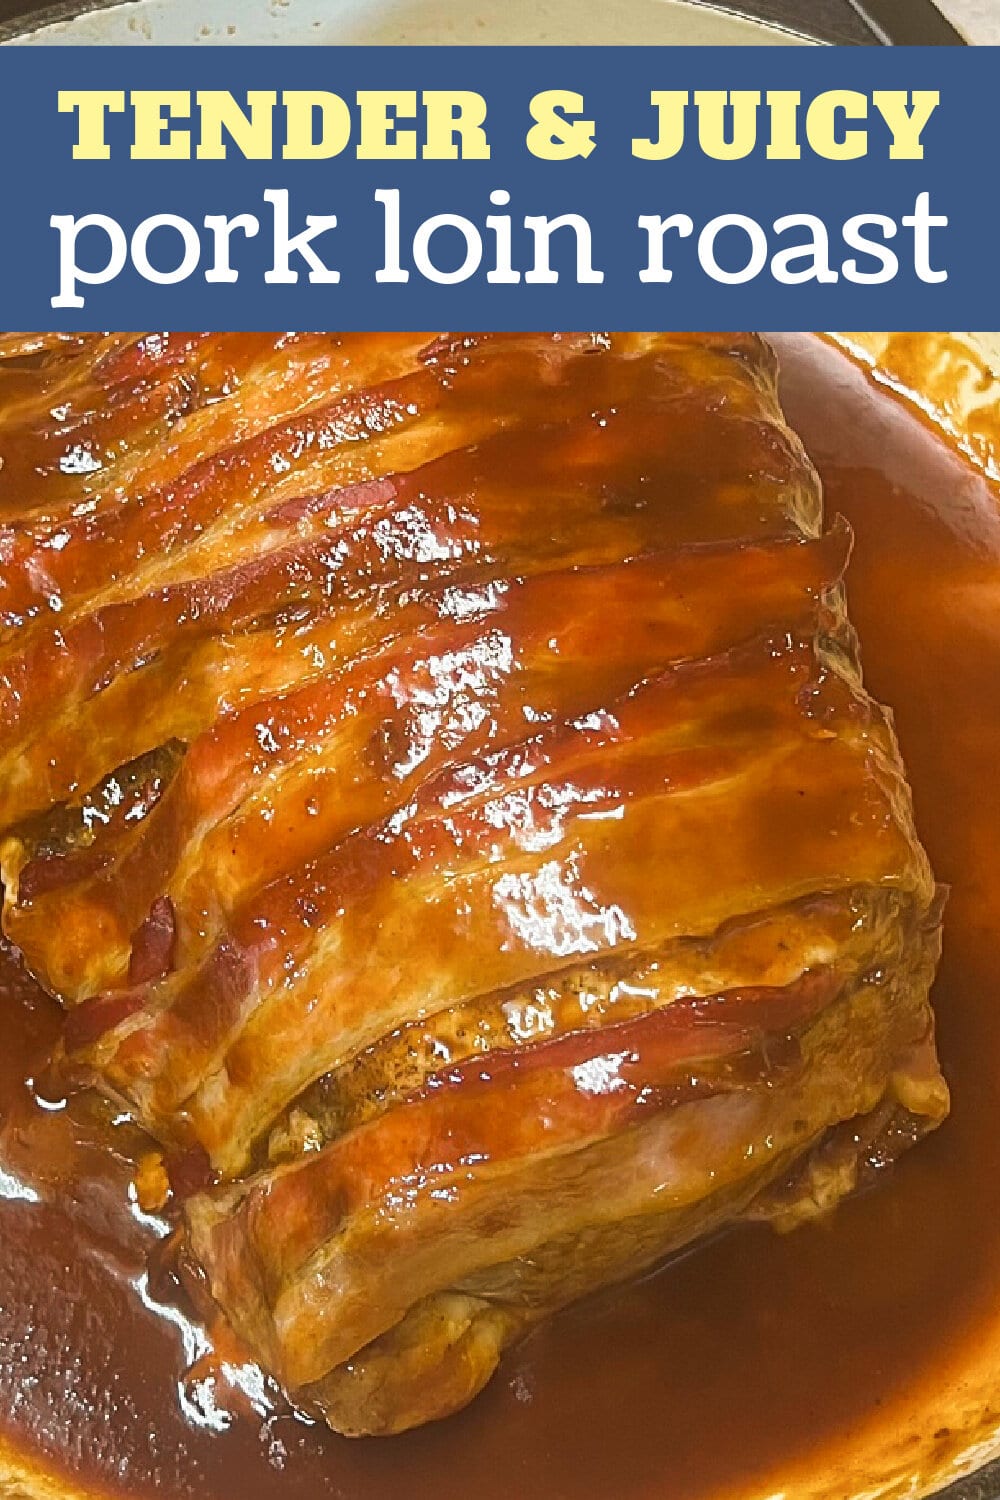 A bacon-wrapped pork loin roast slathered with sauce, ready to serve.